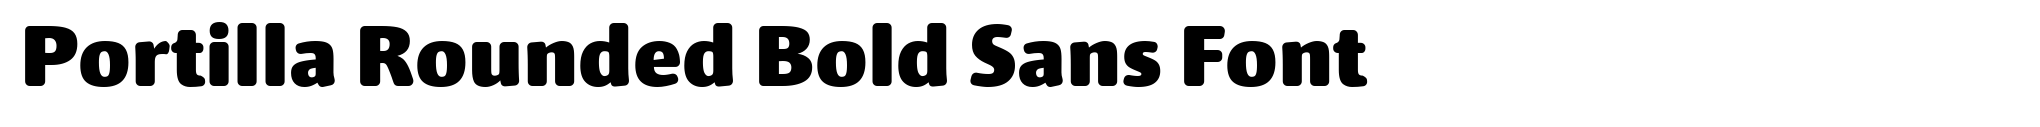 Portilla Rounded Bold Sans Font image